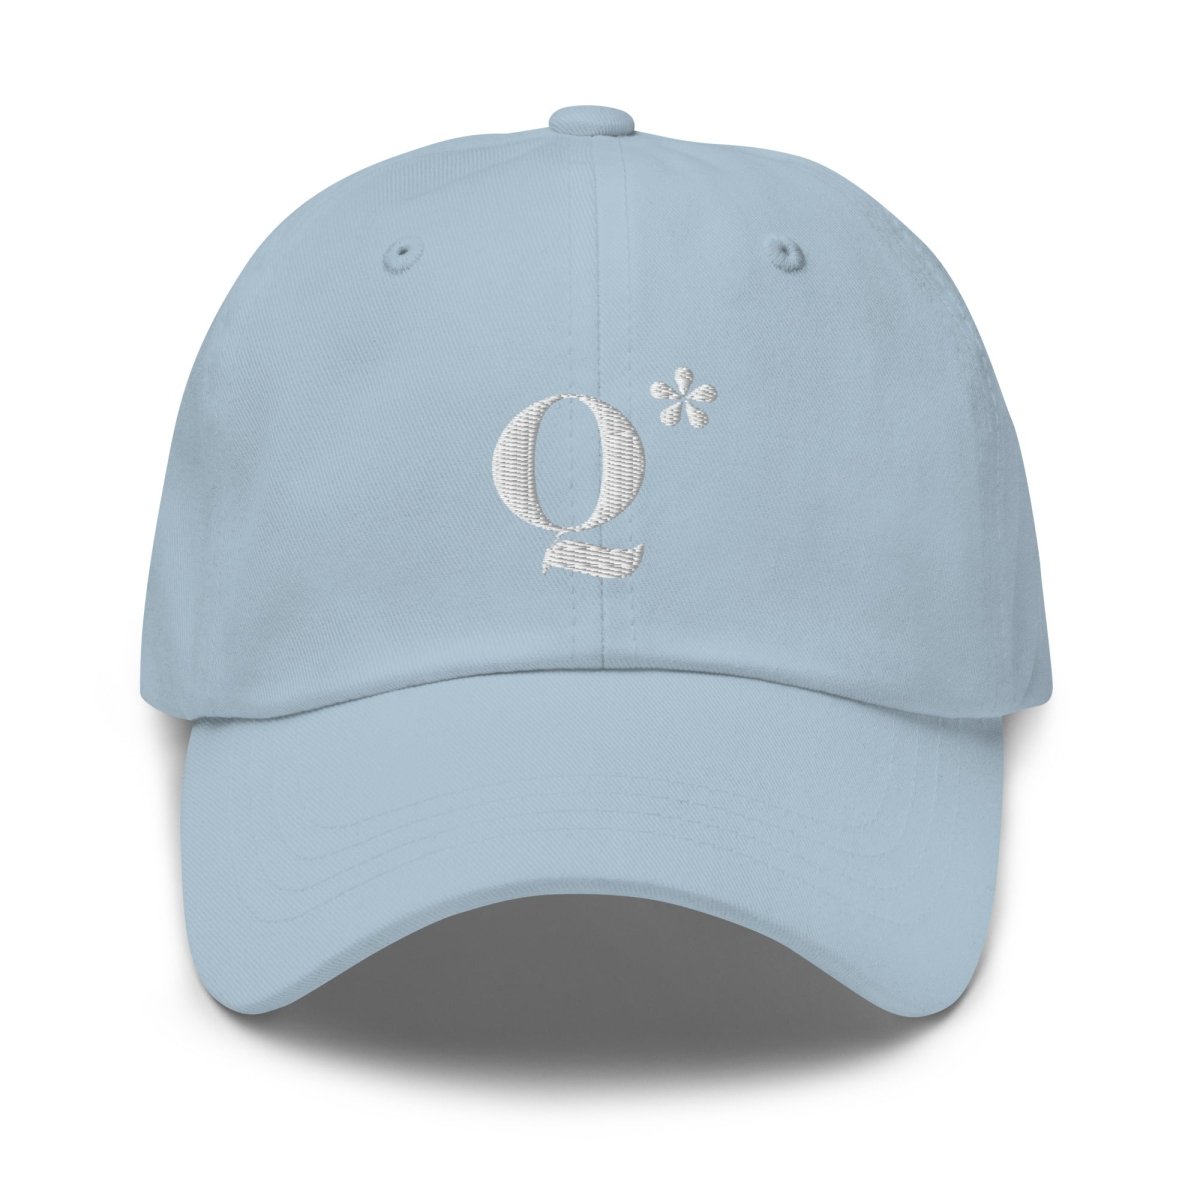 Q* (Q - Star) Embroidered Cap 3 - Light Blue - AI Store